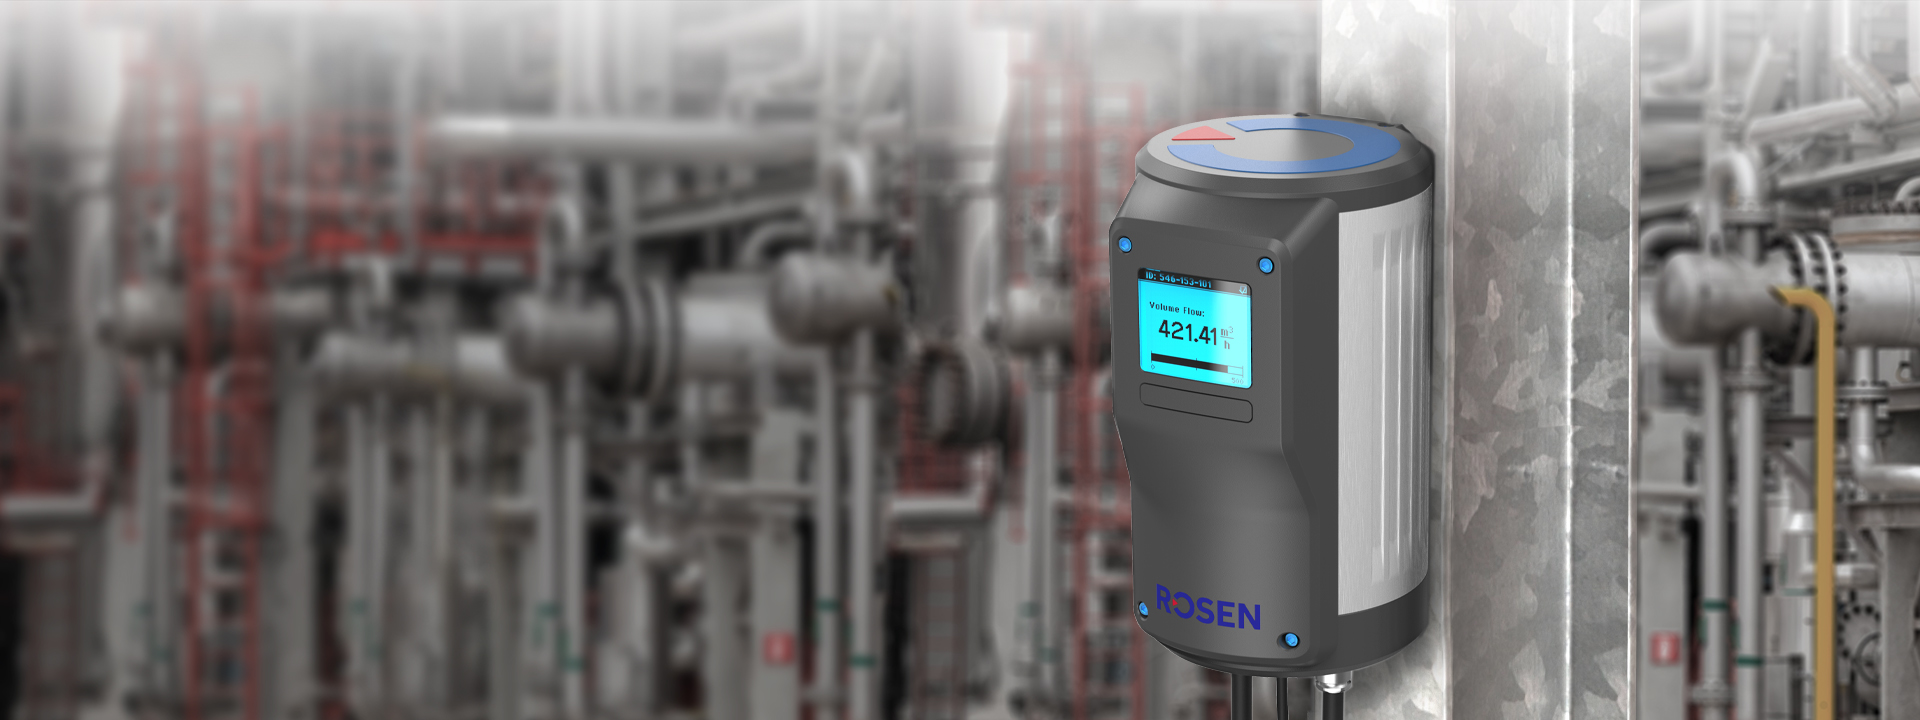 Rosen Flowmeter Sensor Industriedesign Flussbild Projekter Industrial Design